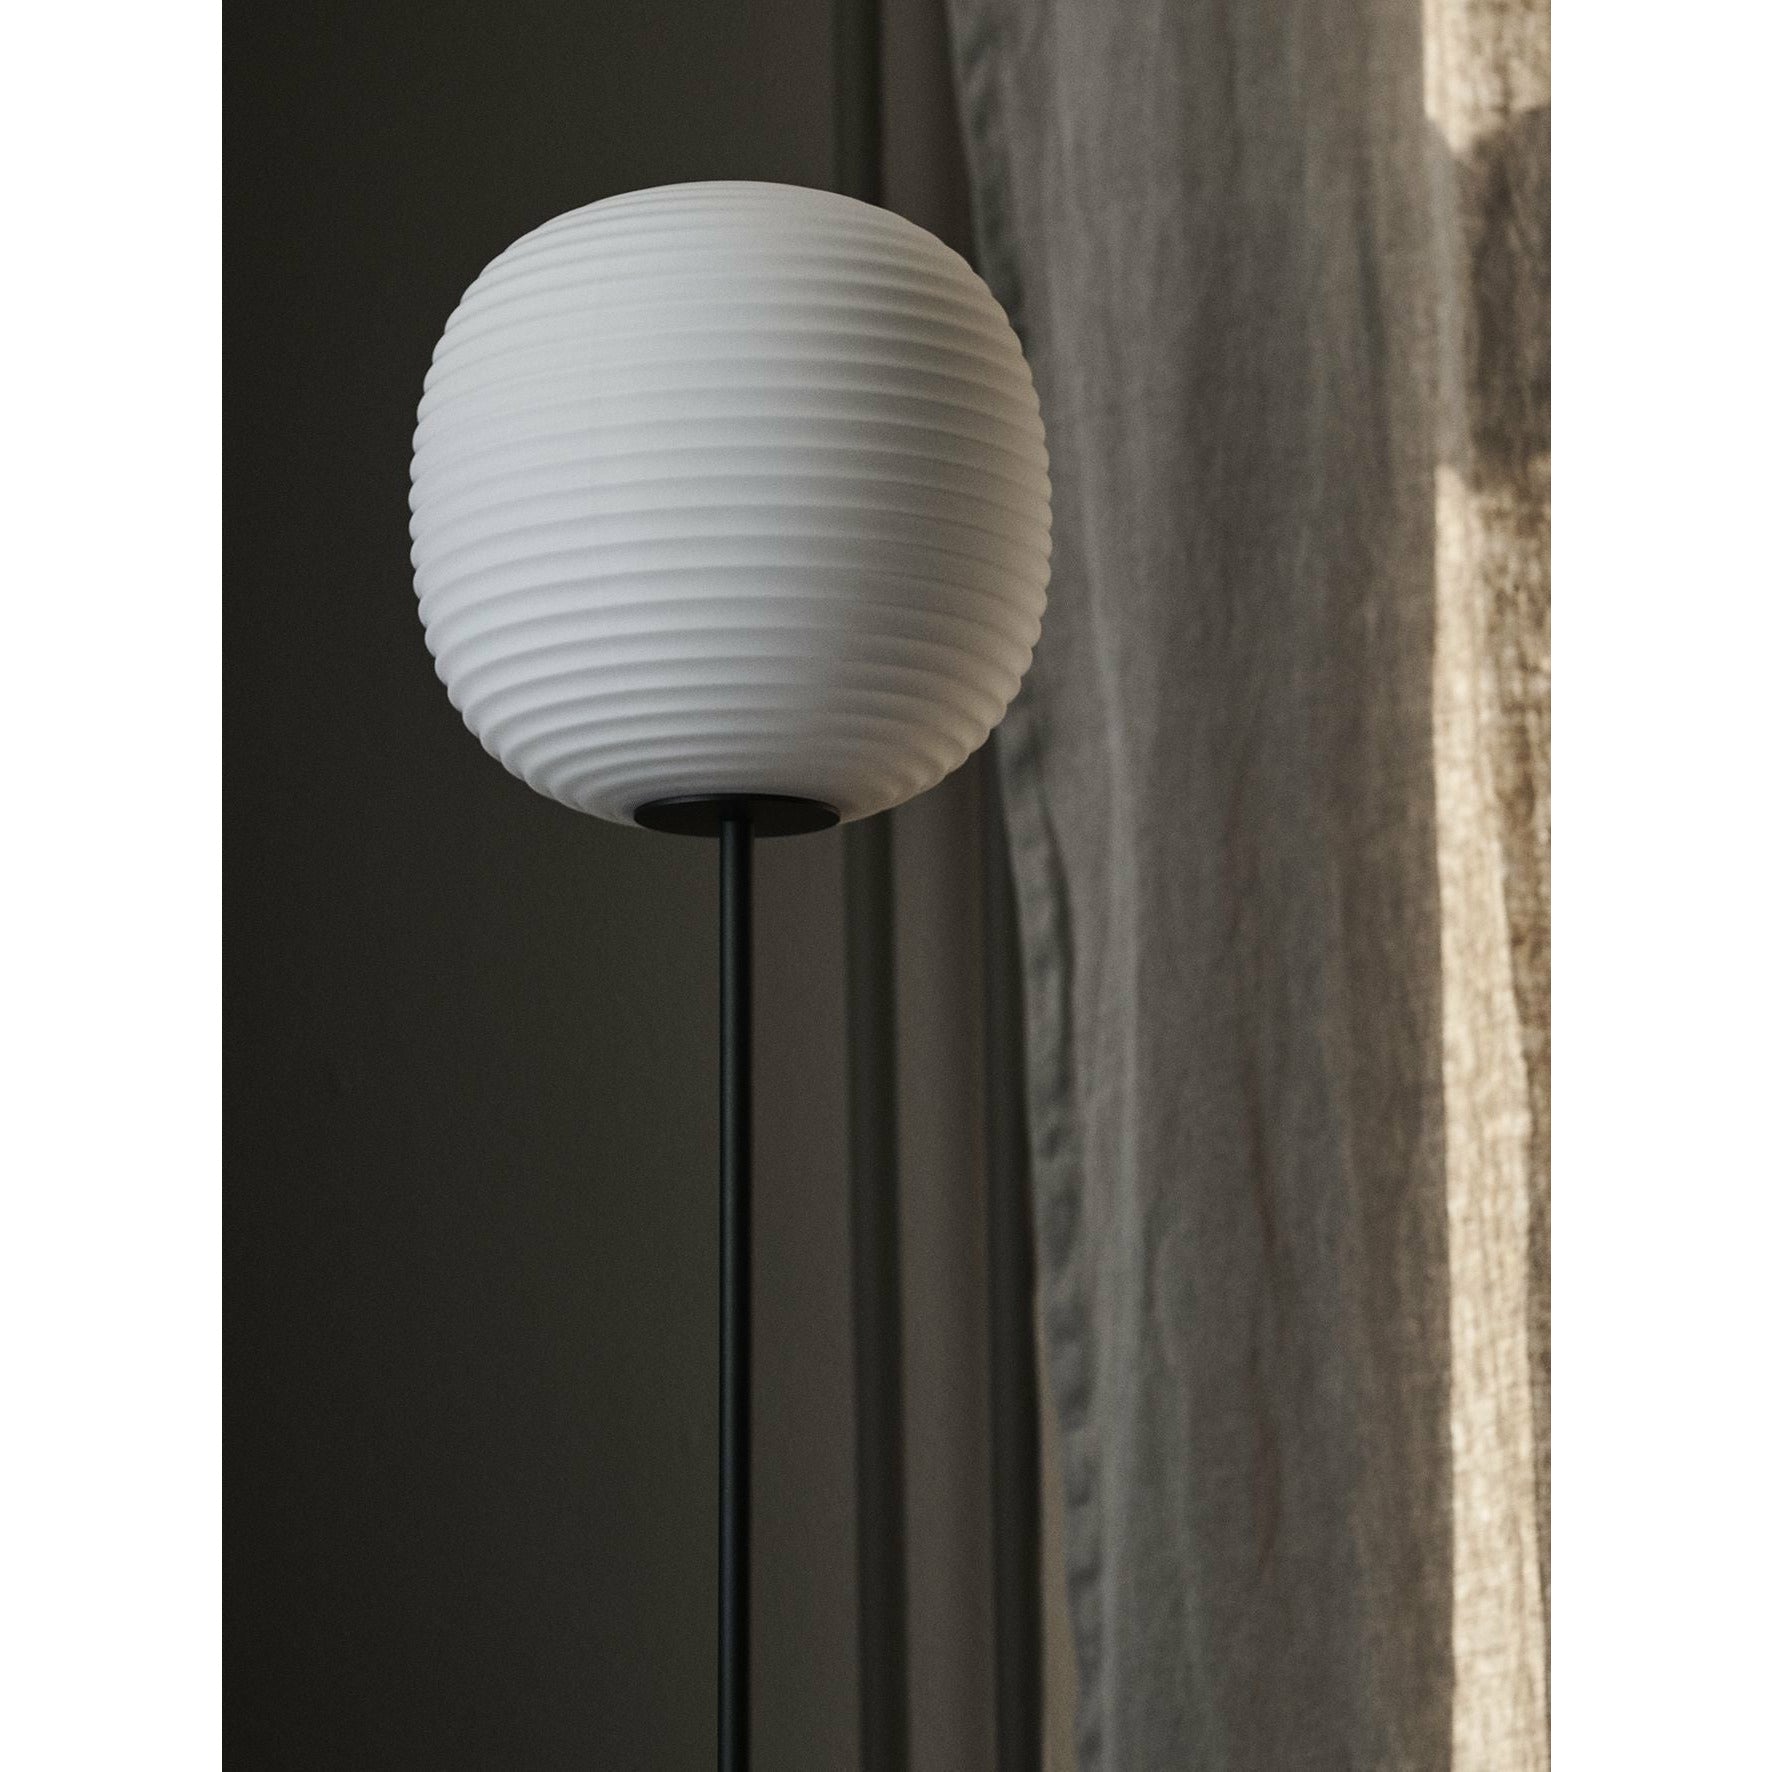 New Works Lanterne gulvlampe, Ø30 cm